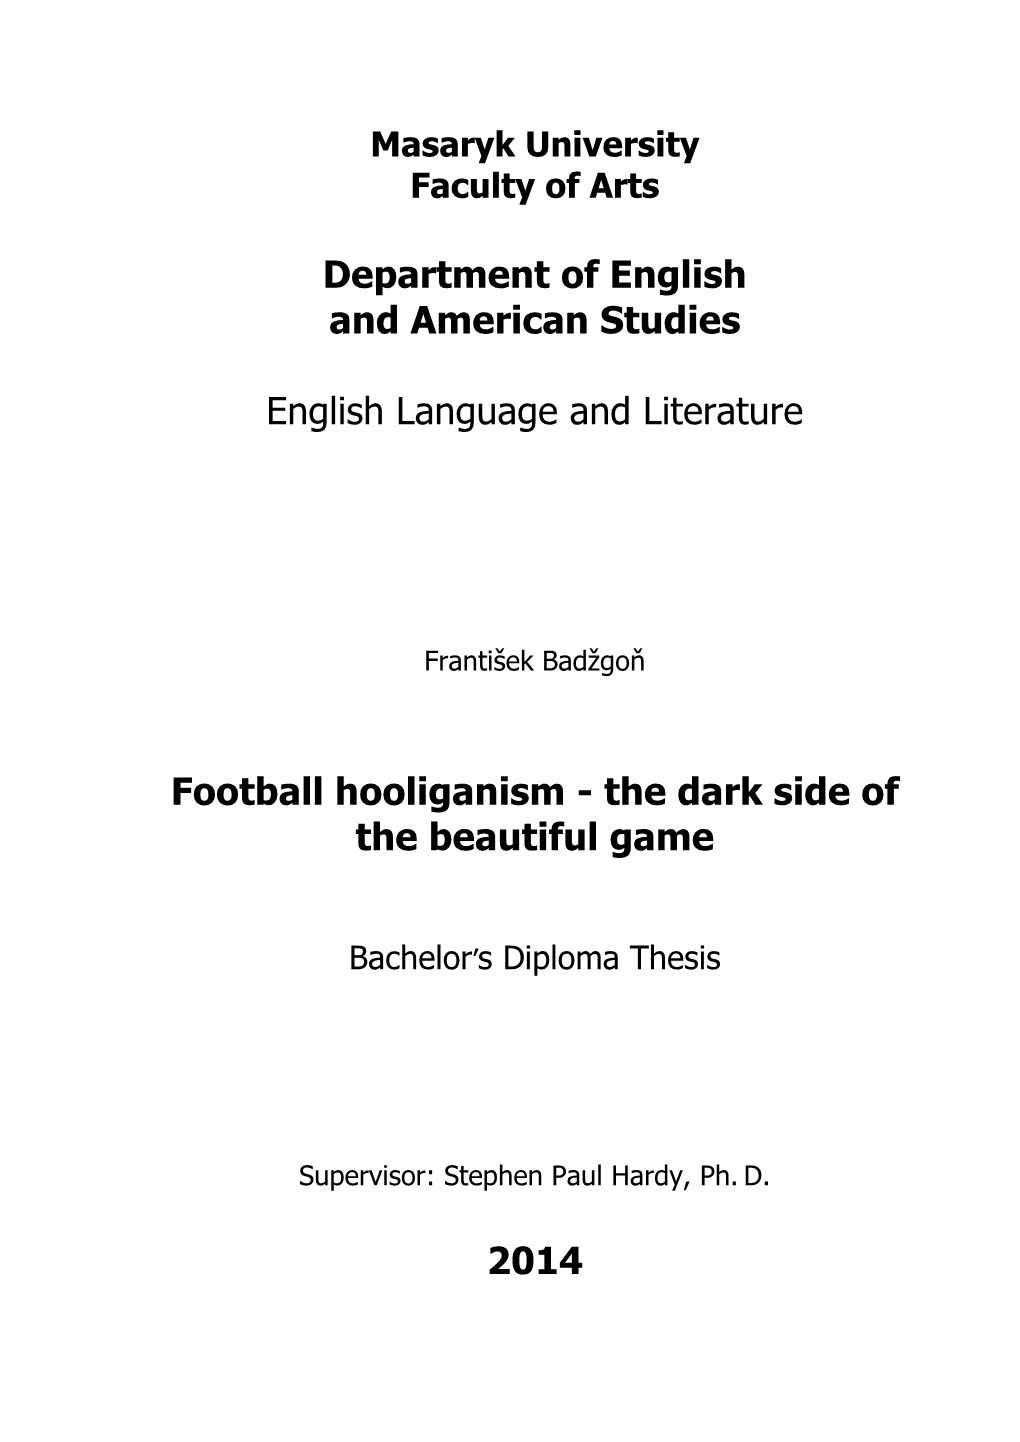 Football Hooliganism - the Dark Side of the Beautiful Game